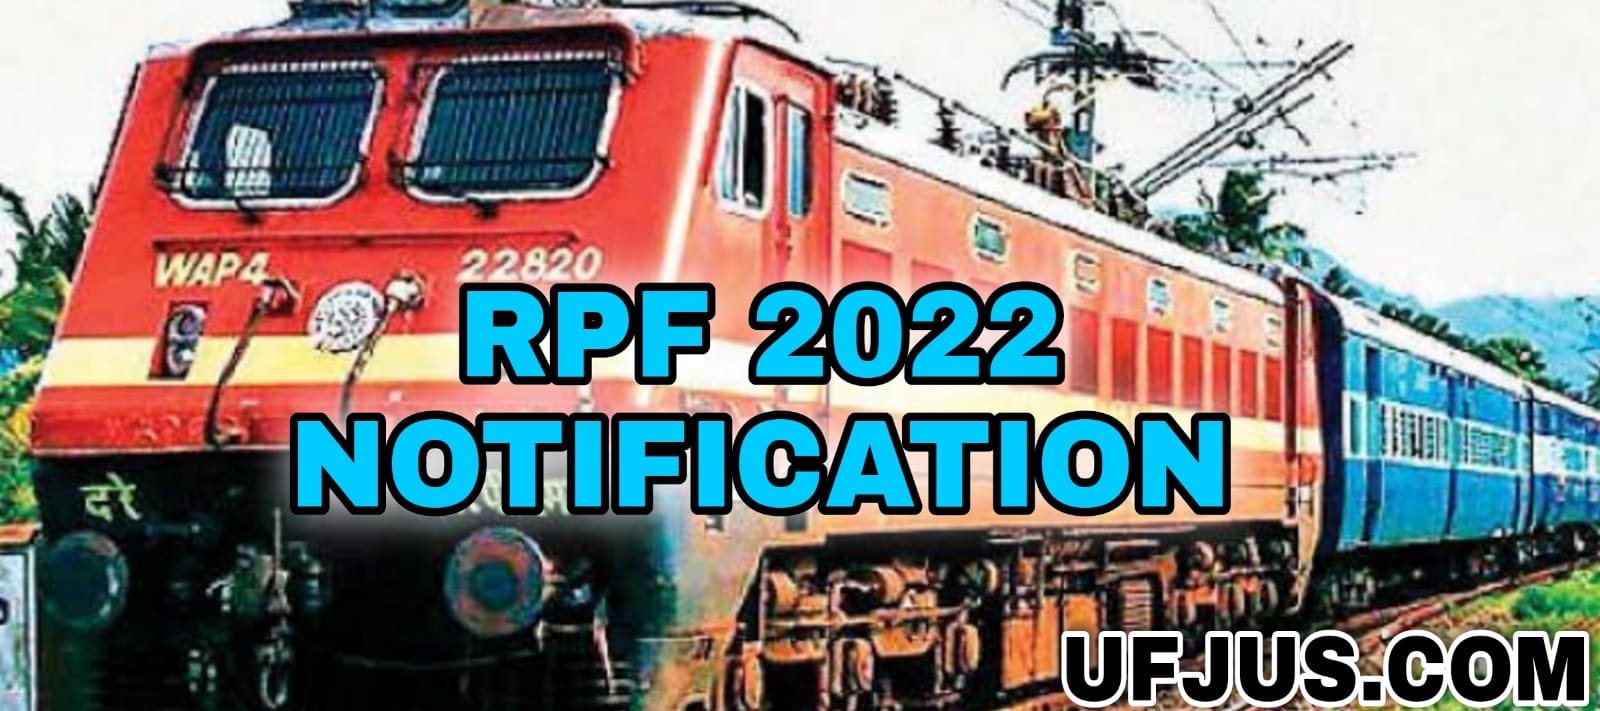 RPF 18000 Above Posts Notification 2022 Full Details